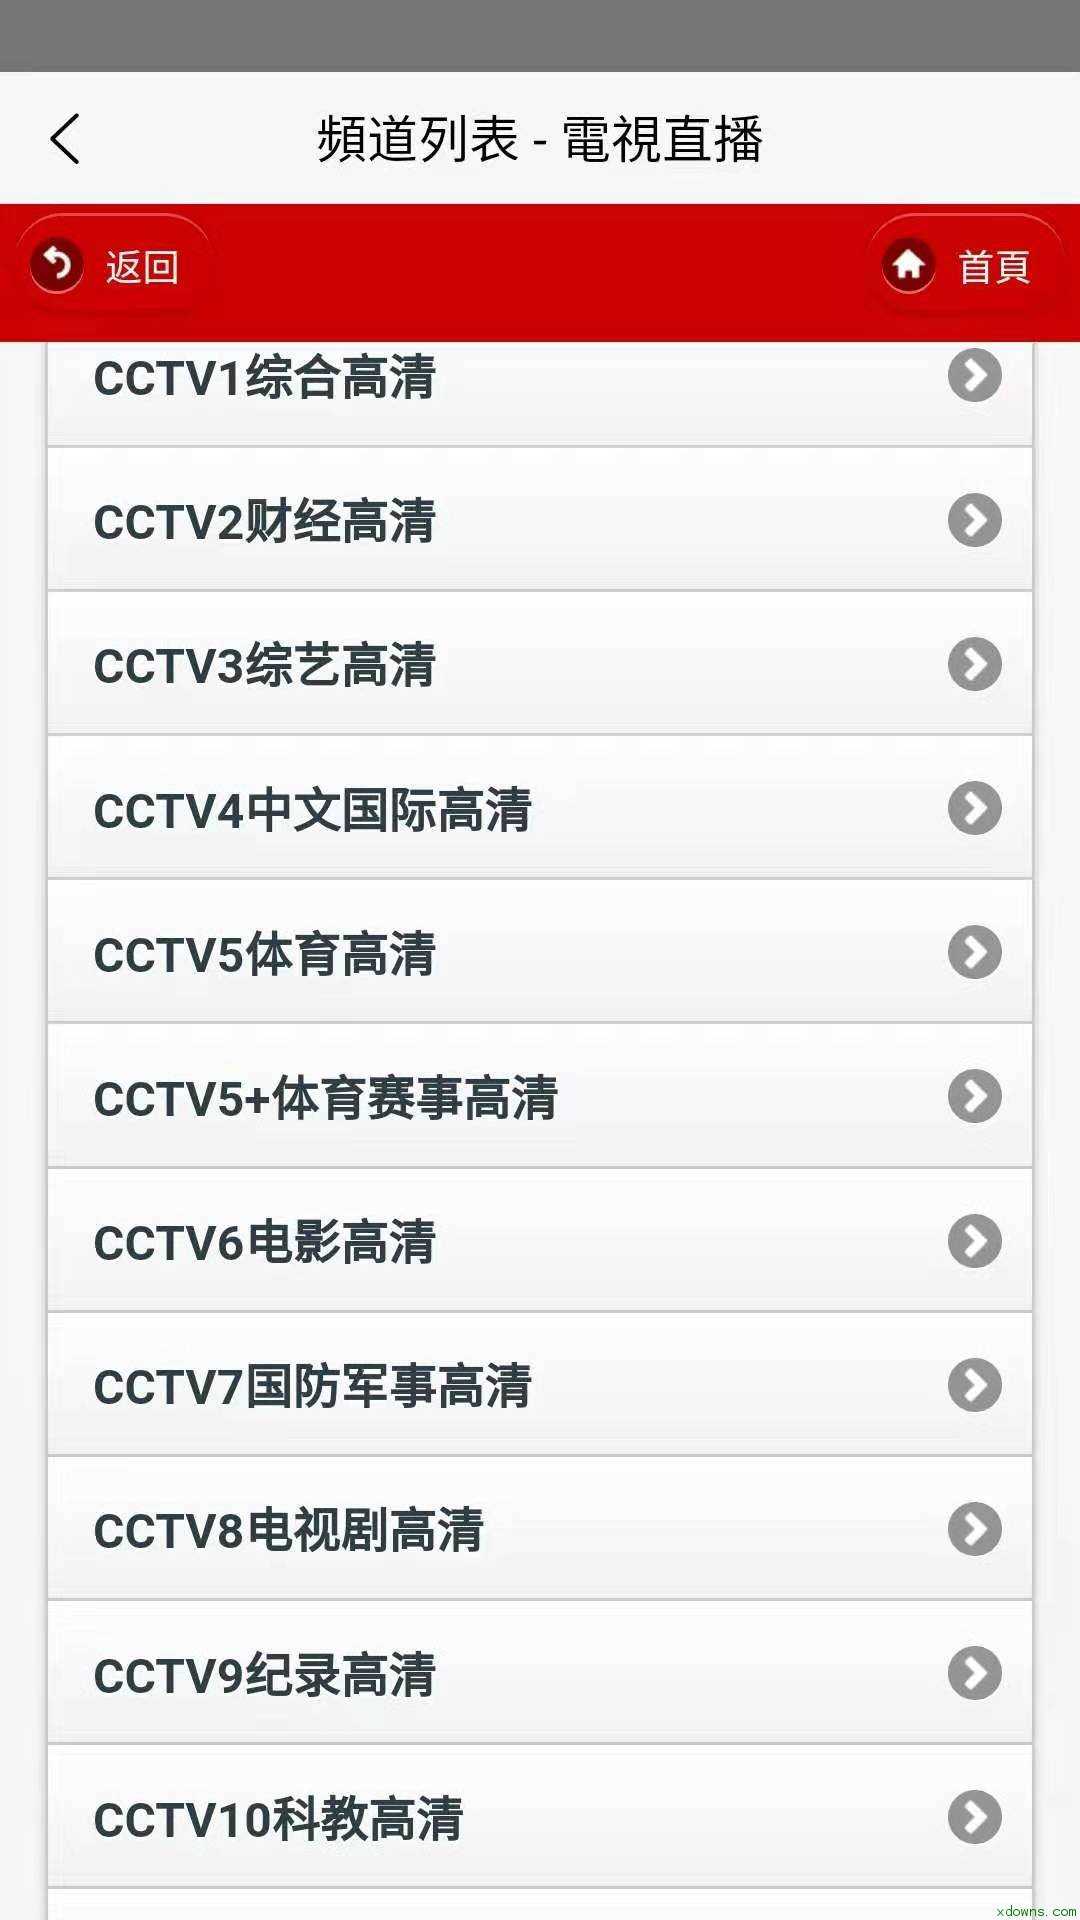 IPTV下载安卓版